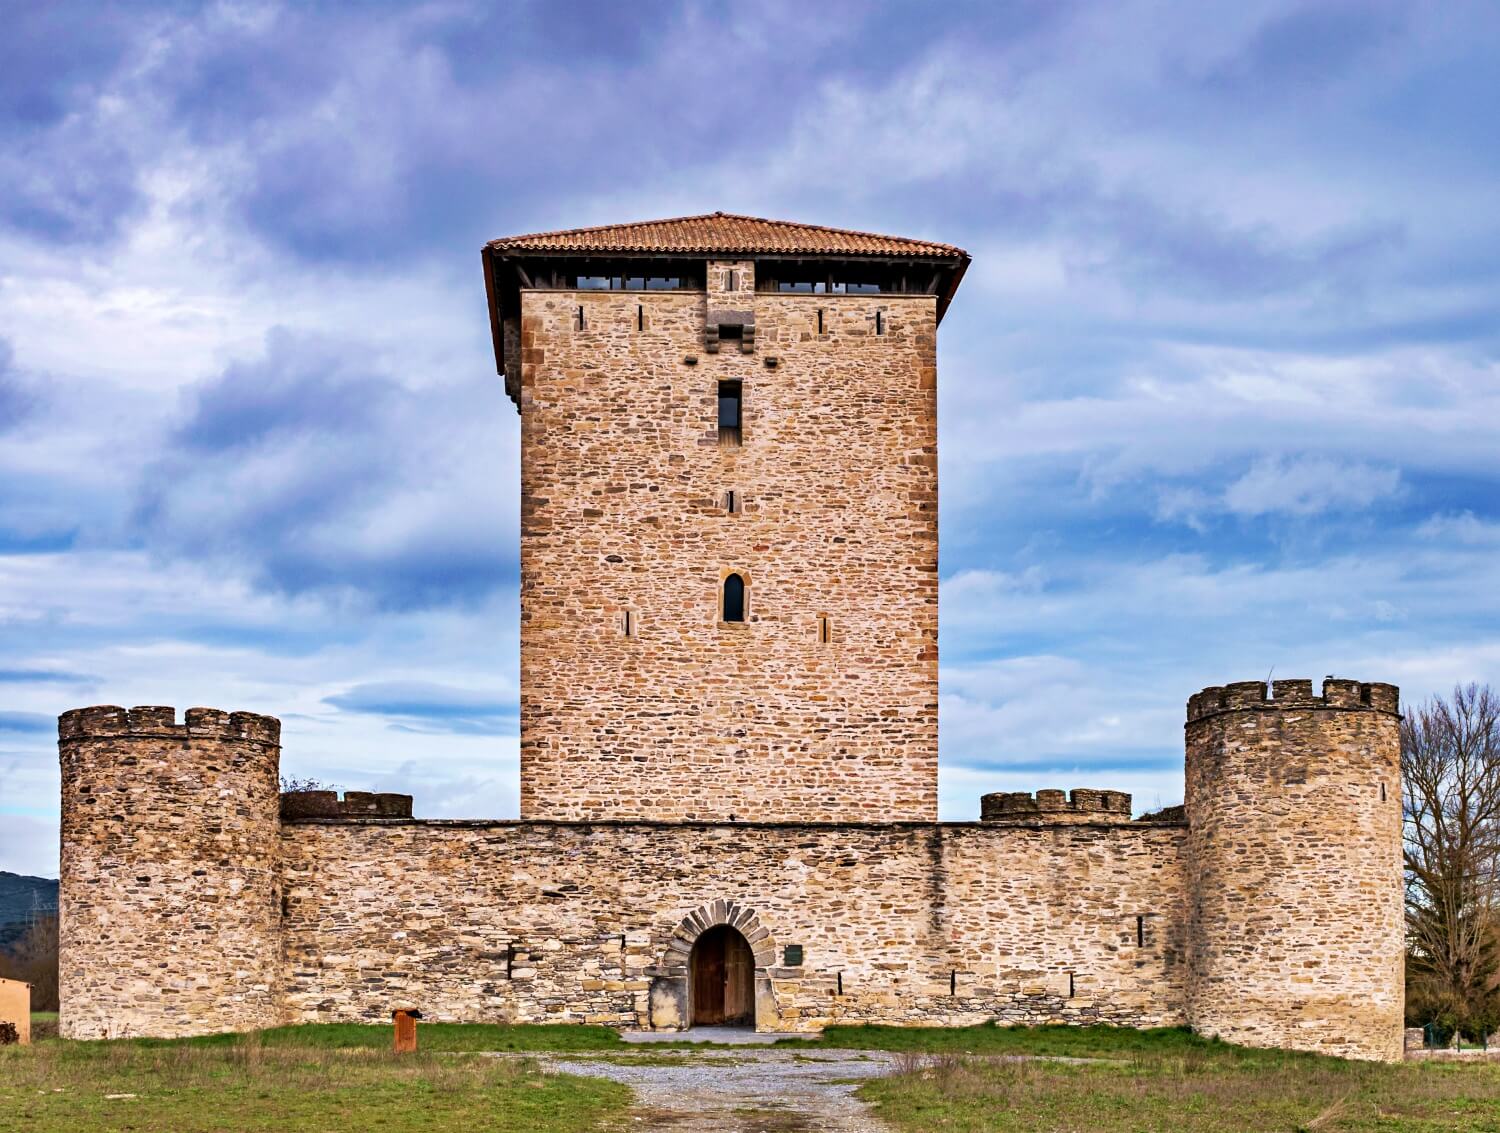 Tower of Mendoza